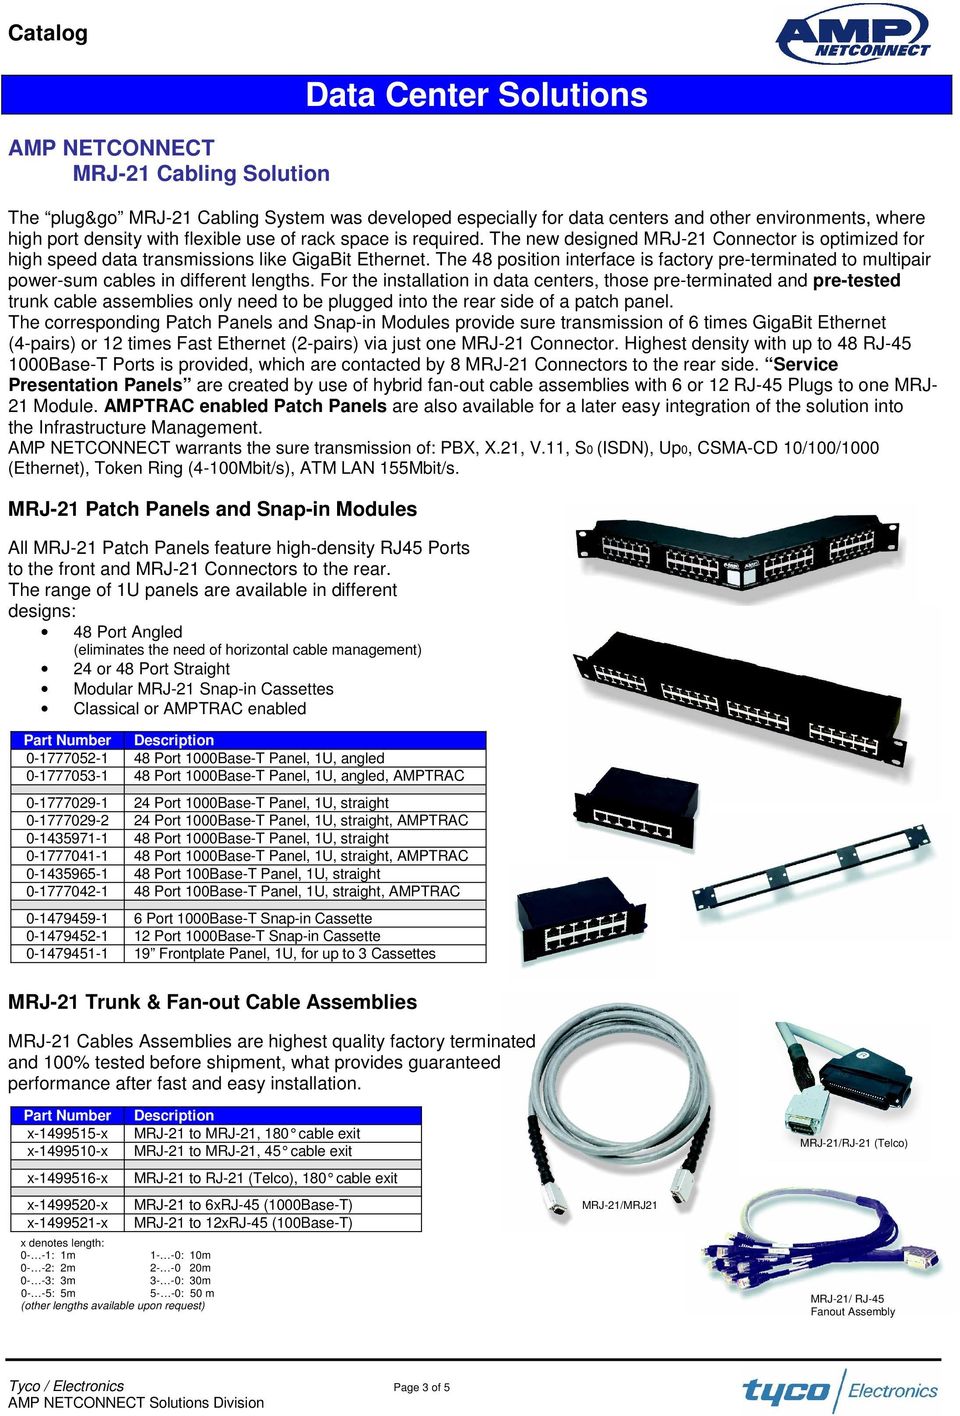 100Base-T Panel, 1U, straight 0-1777042-1 48 Port 100Base-T Panel, 1U, straight, AMPTRAC 0-1479459-1 6 Port 1000Base-T Snap-in Cassette 0-1479452-1 12 Port 1000Base-T Snap-in Cassette 0-1479451-1 19